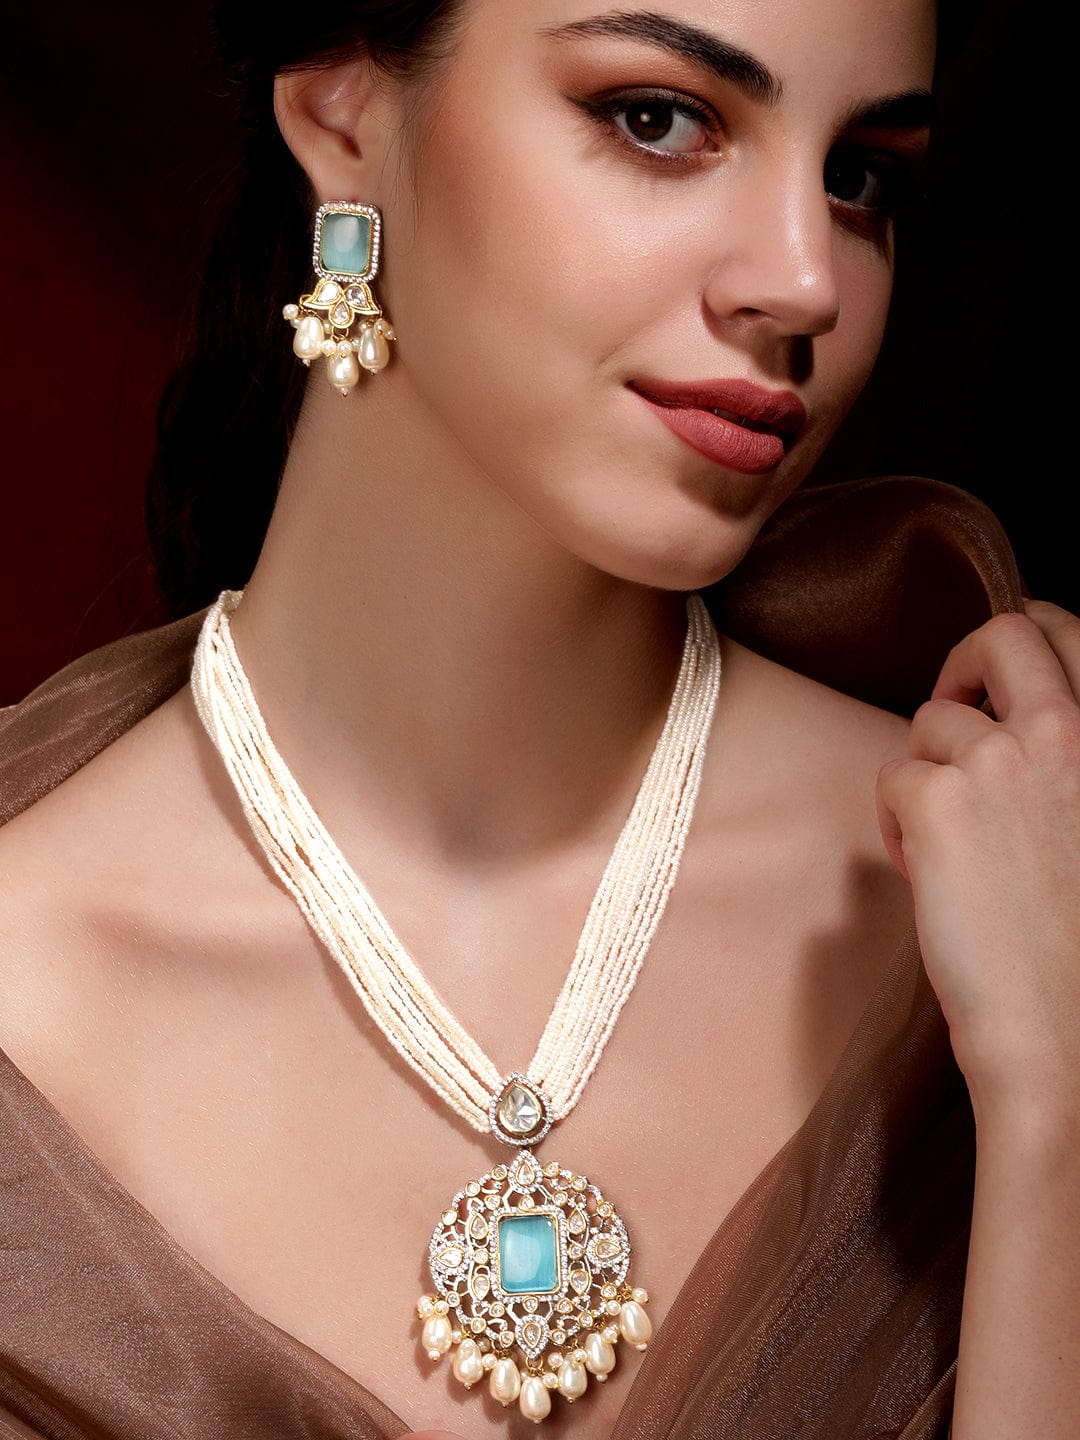 Rubans Ocean's Elegance White Pearl Blue Stone Necklace Set Jewellery Sets